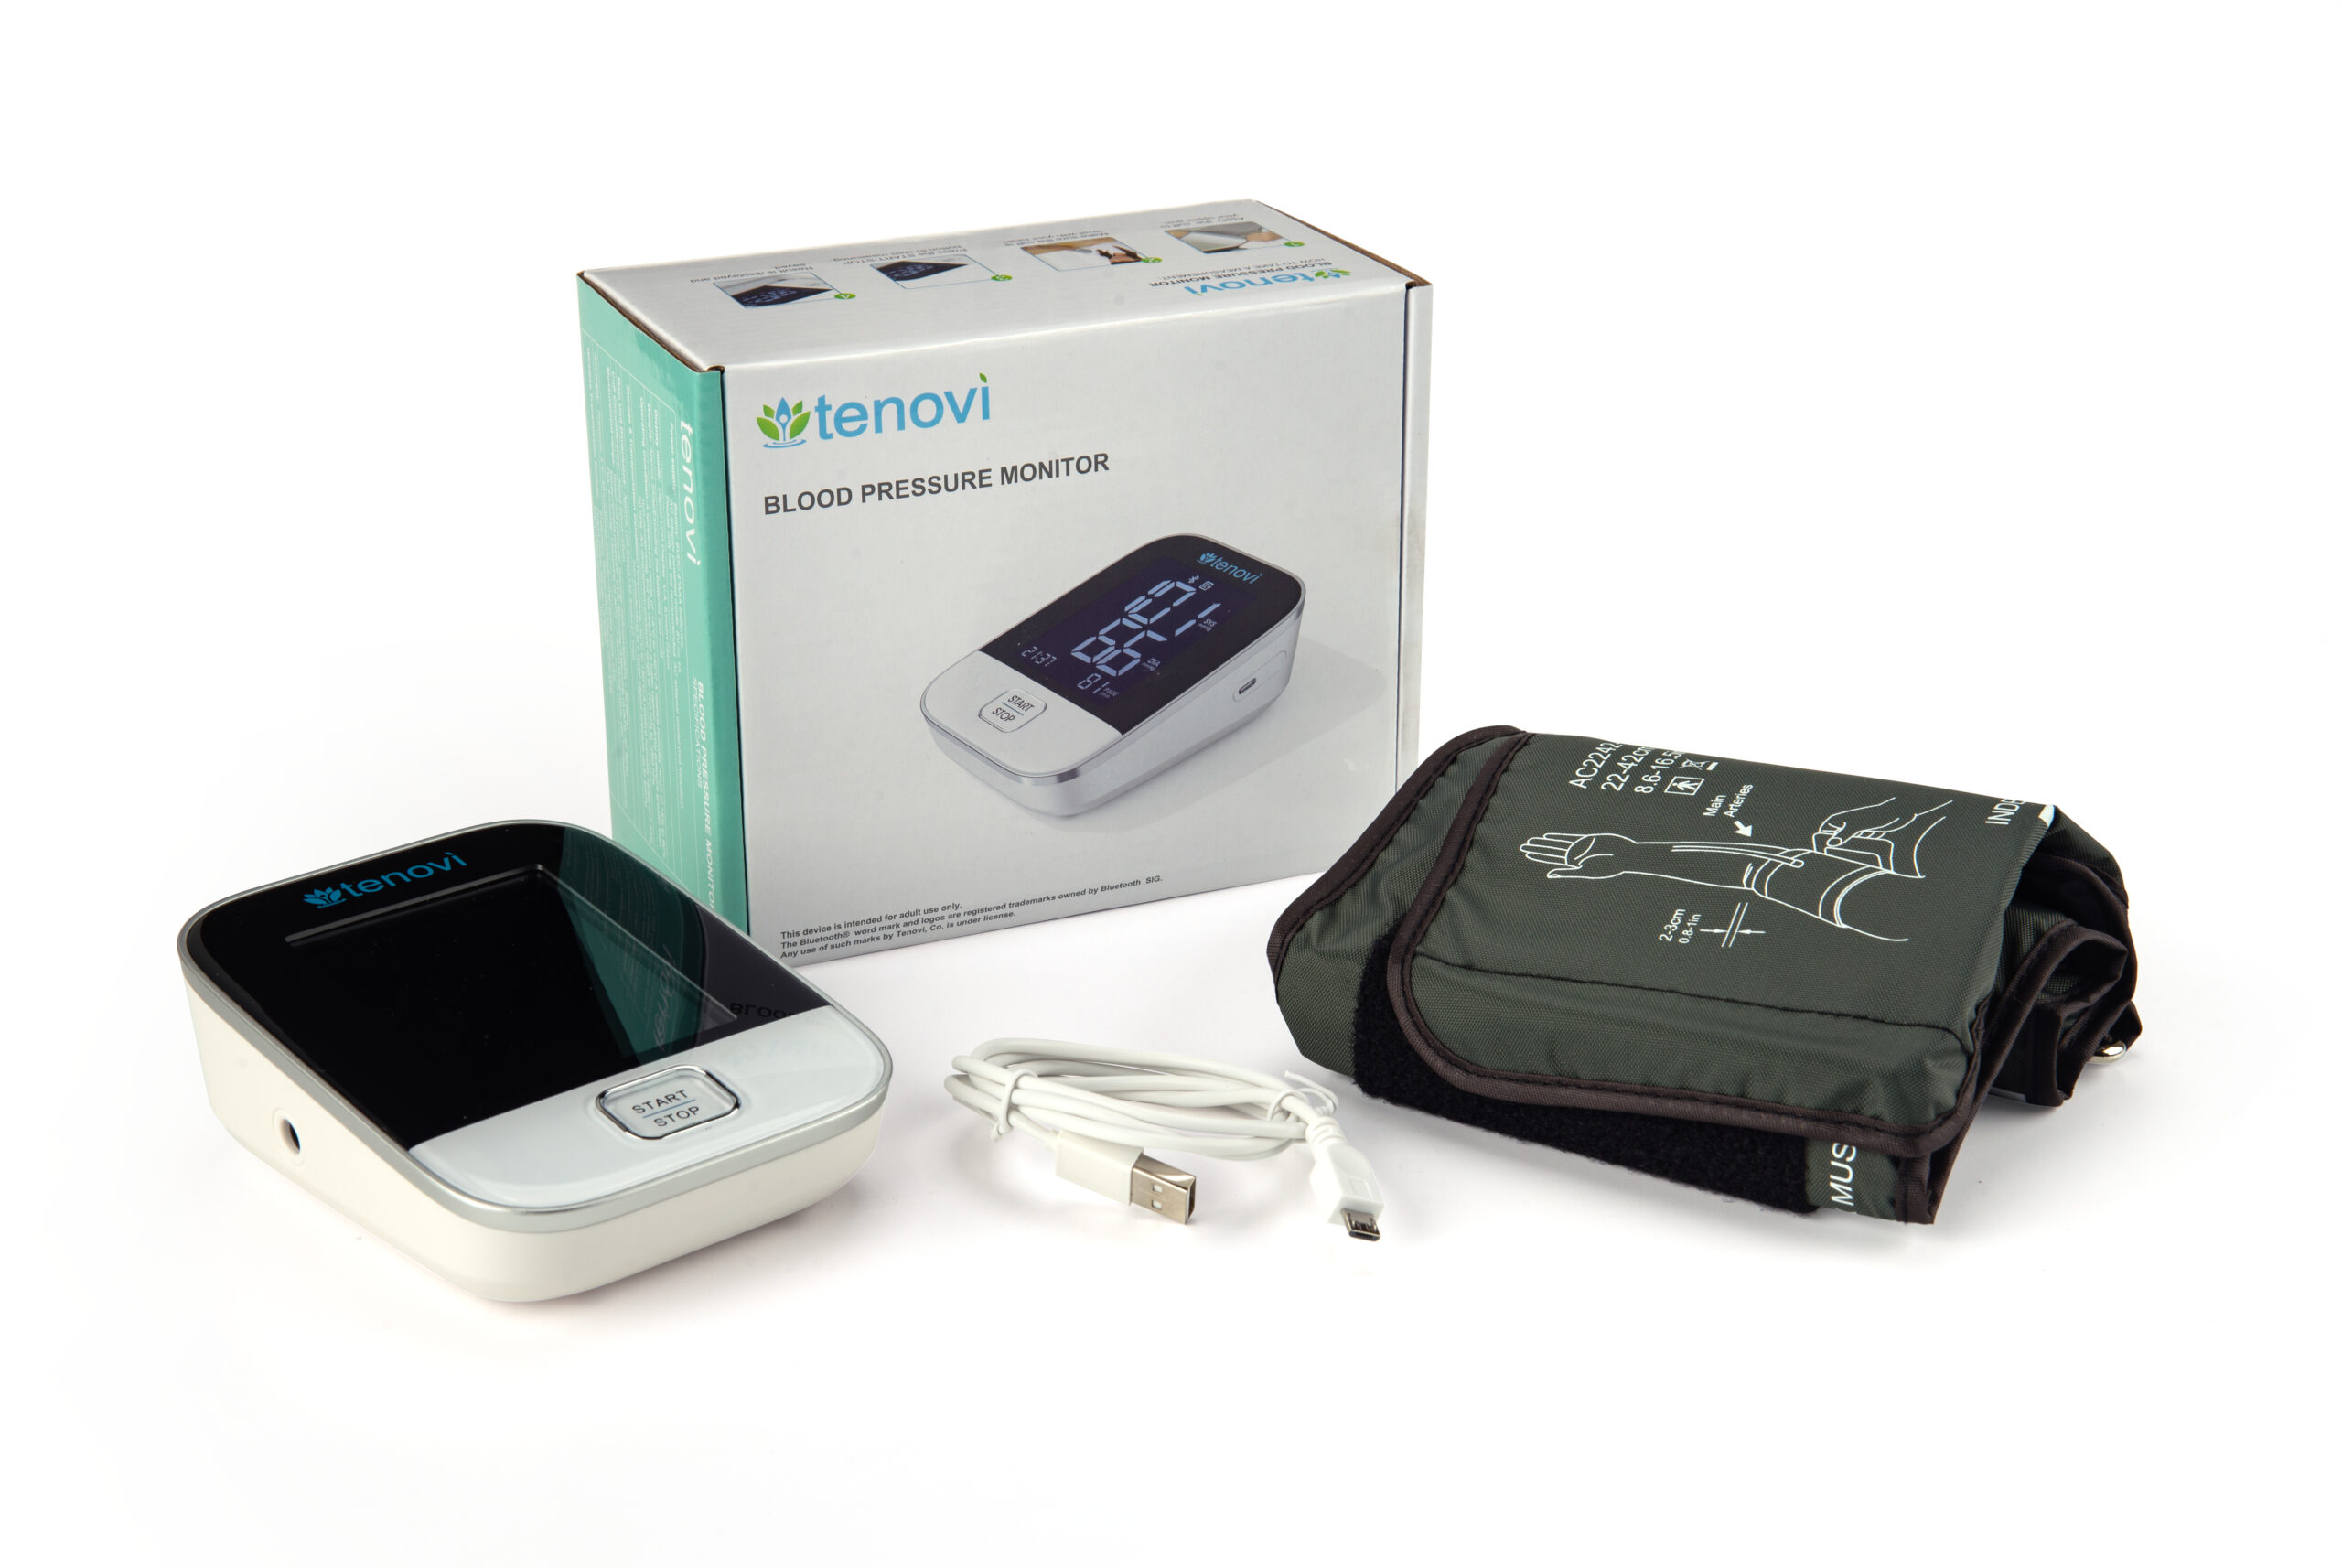 Omron HeartGuide wearable blood pressure monitor look like a smartwatch -  YouTube